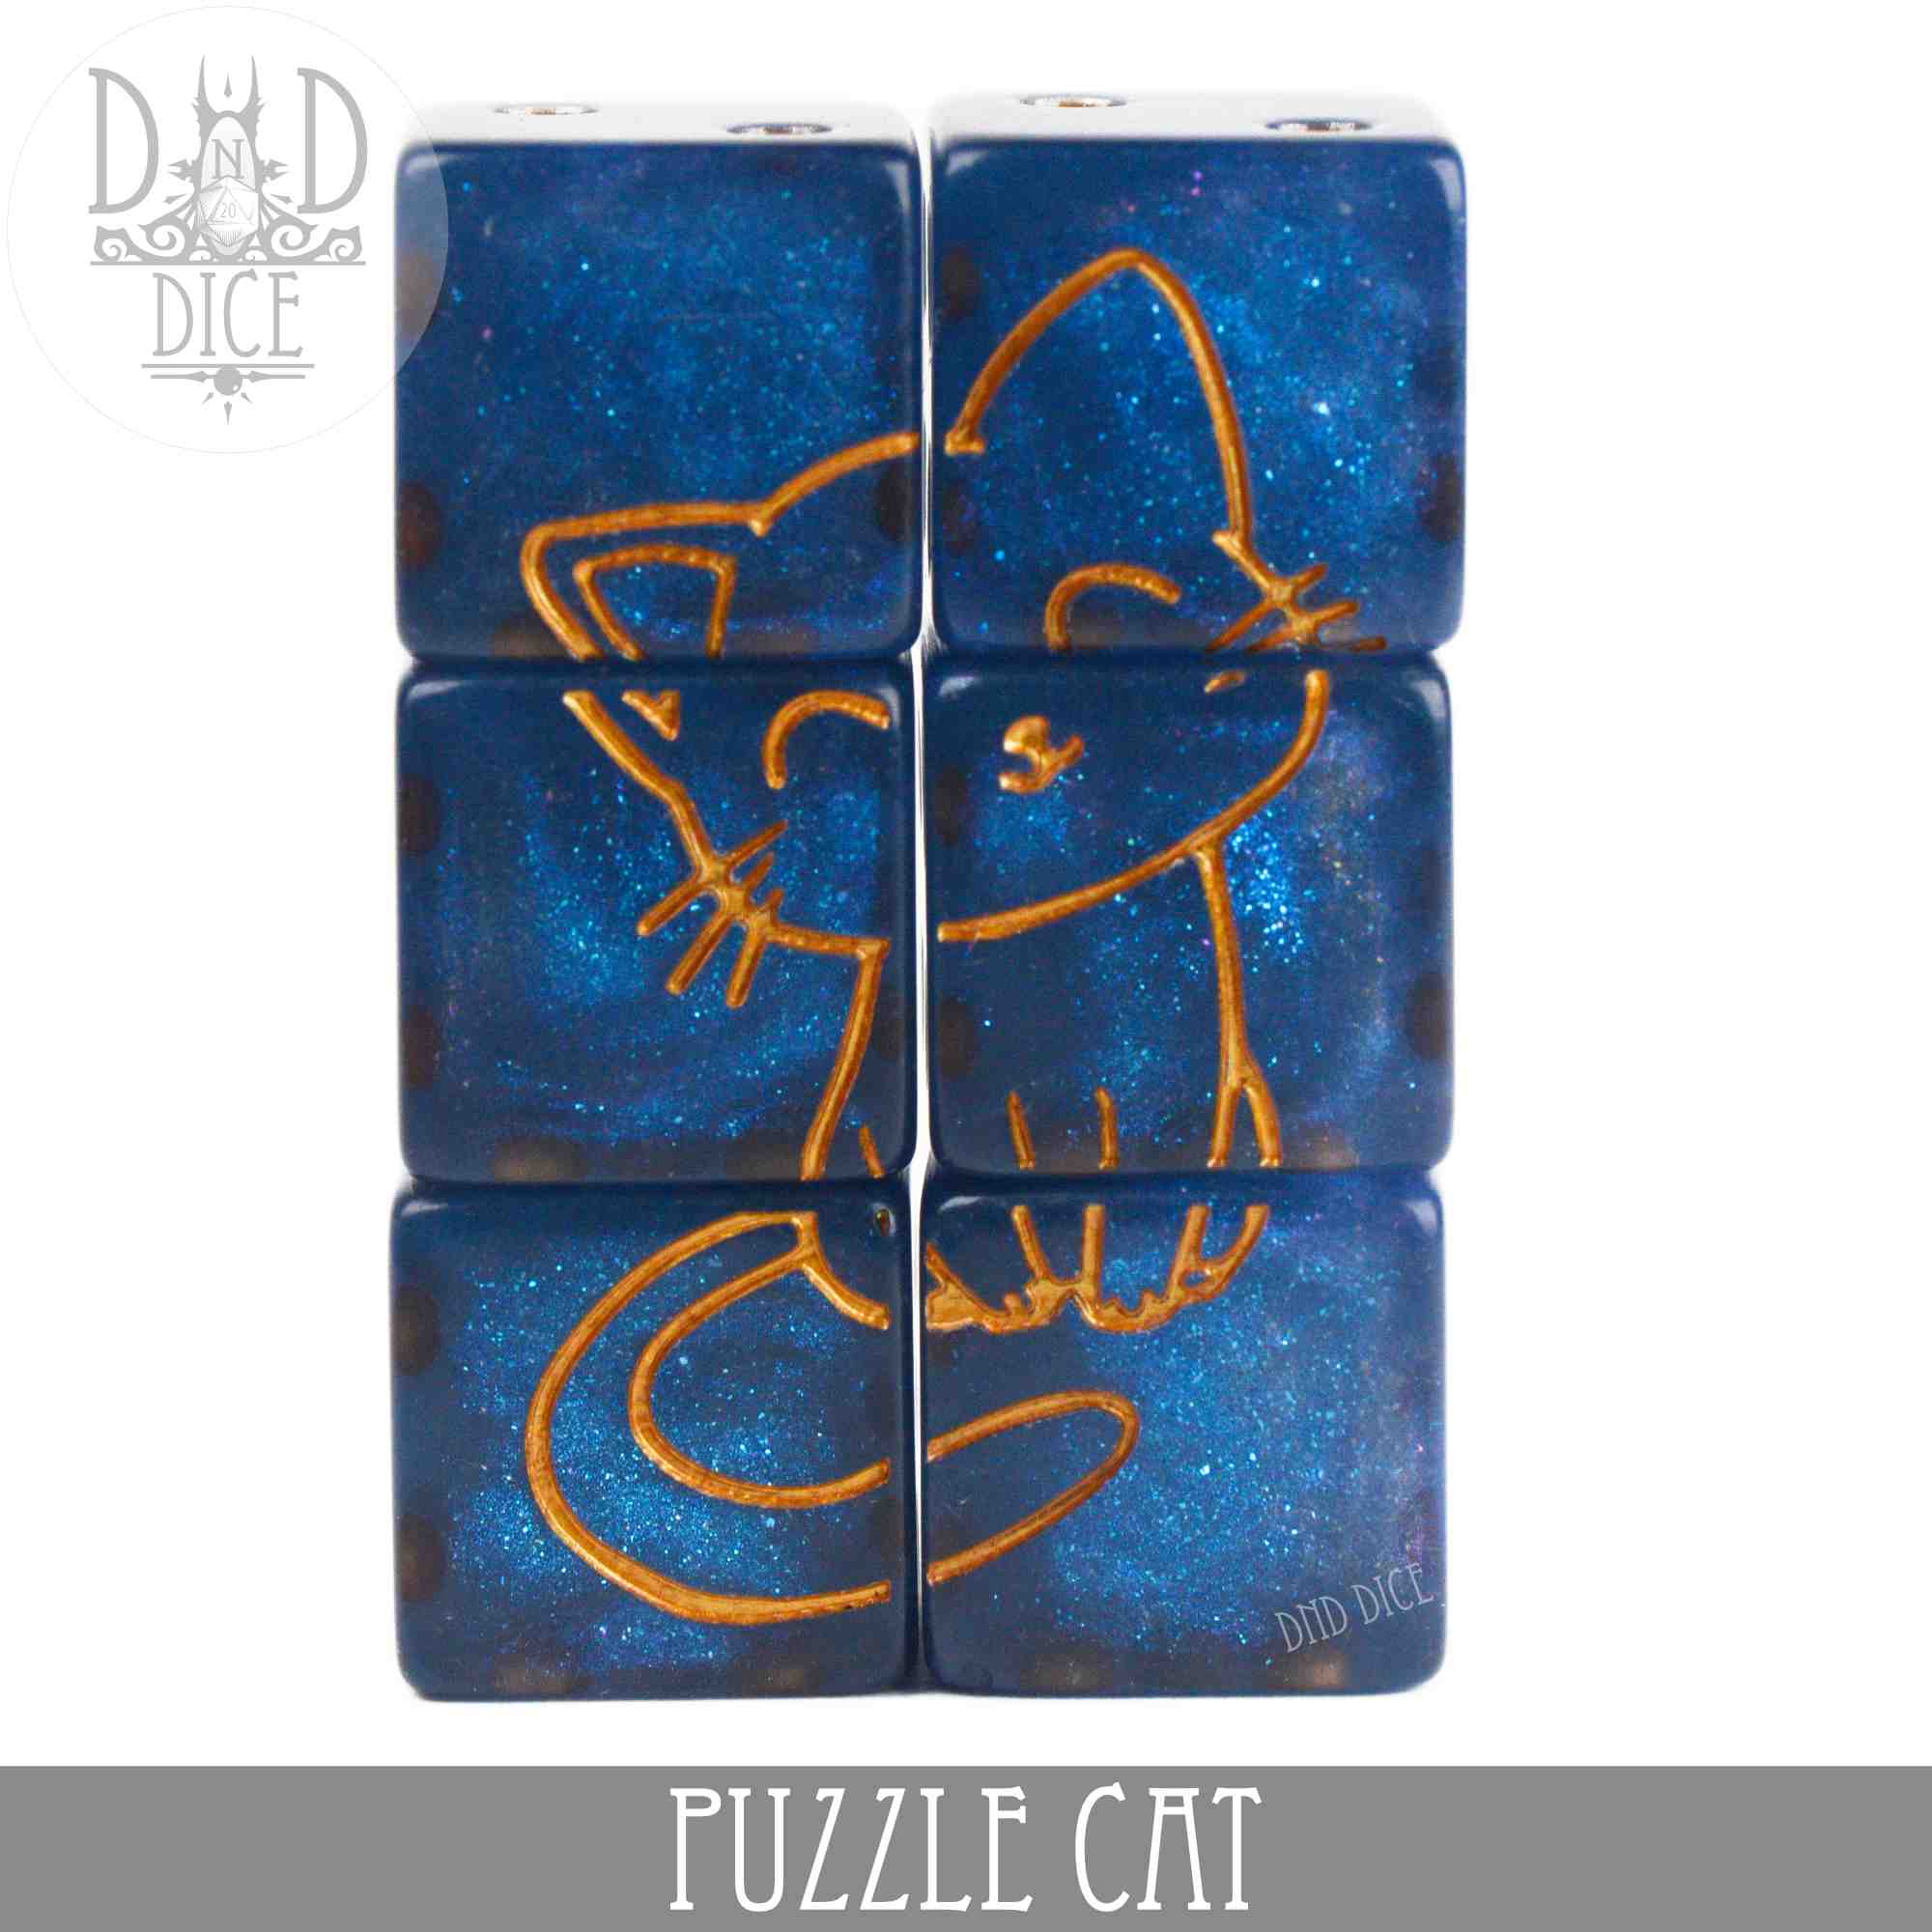 Puzzle Cat 6D6 Dice Set